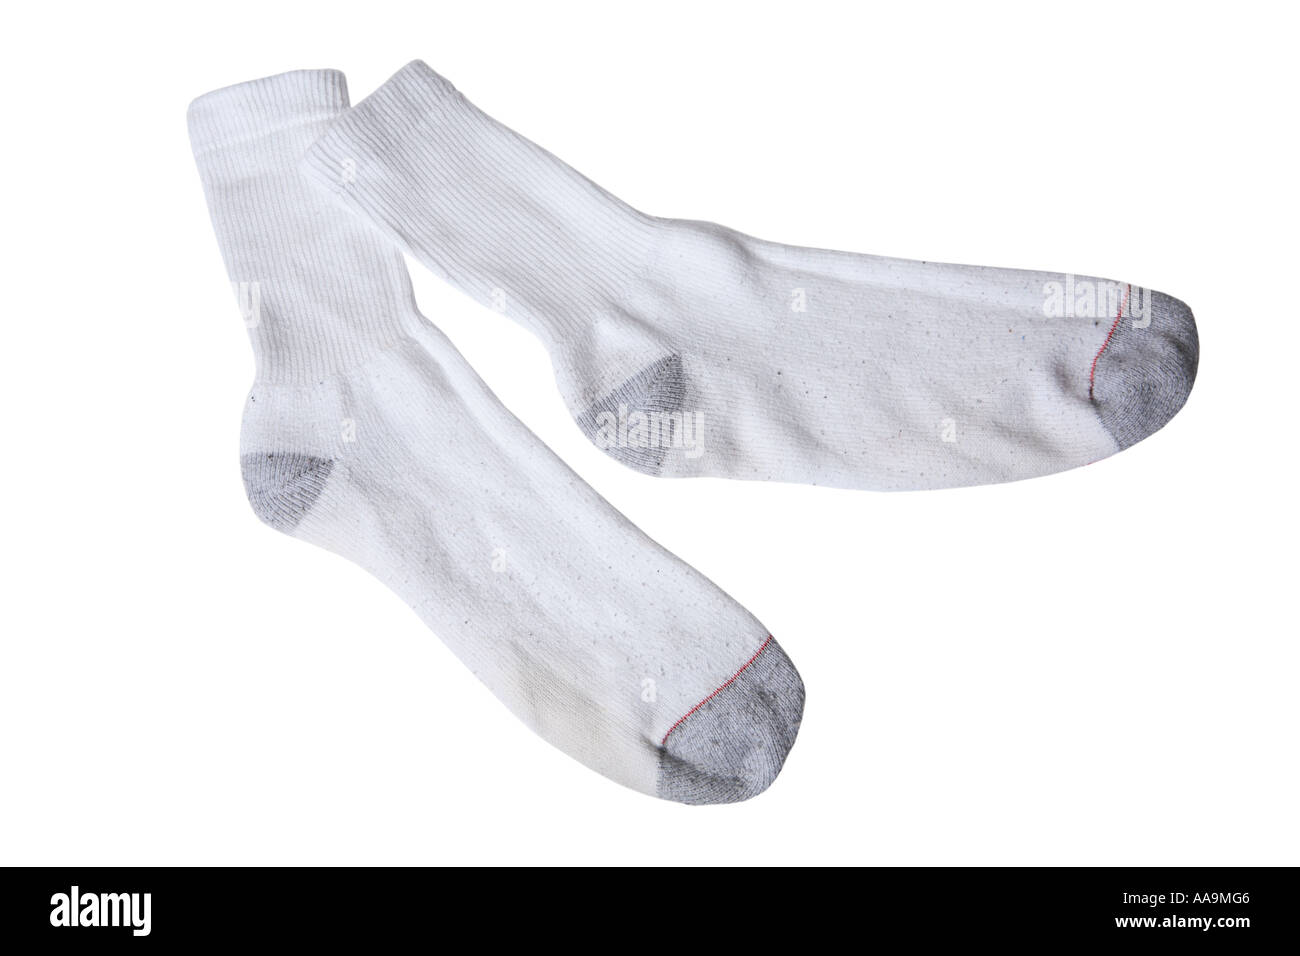 Pair of white athletic socks Stock Photo - Alamy